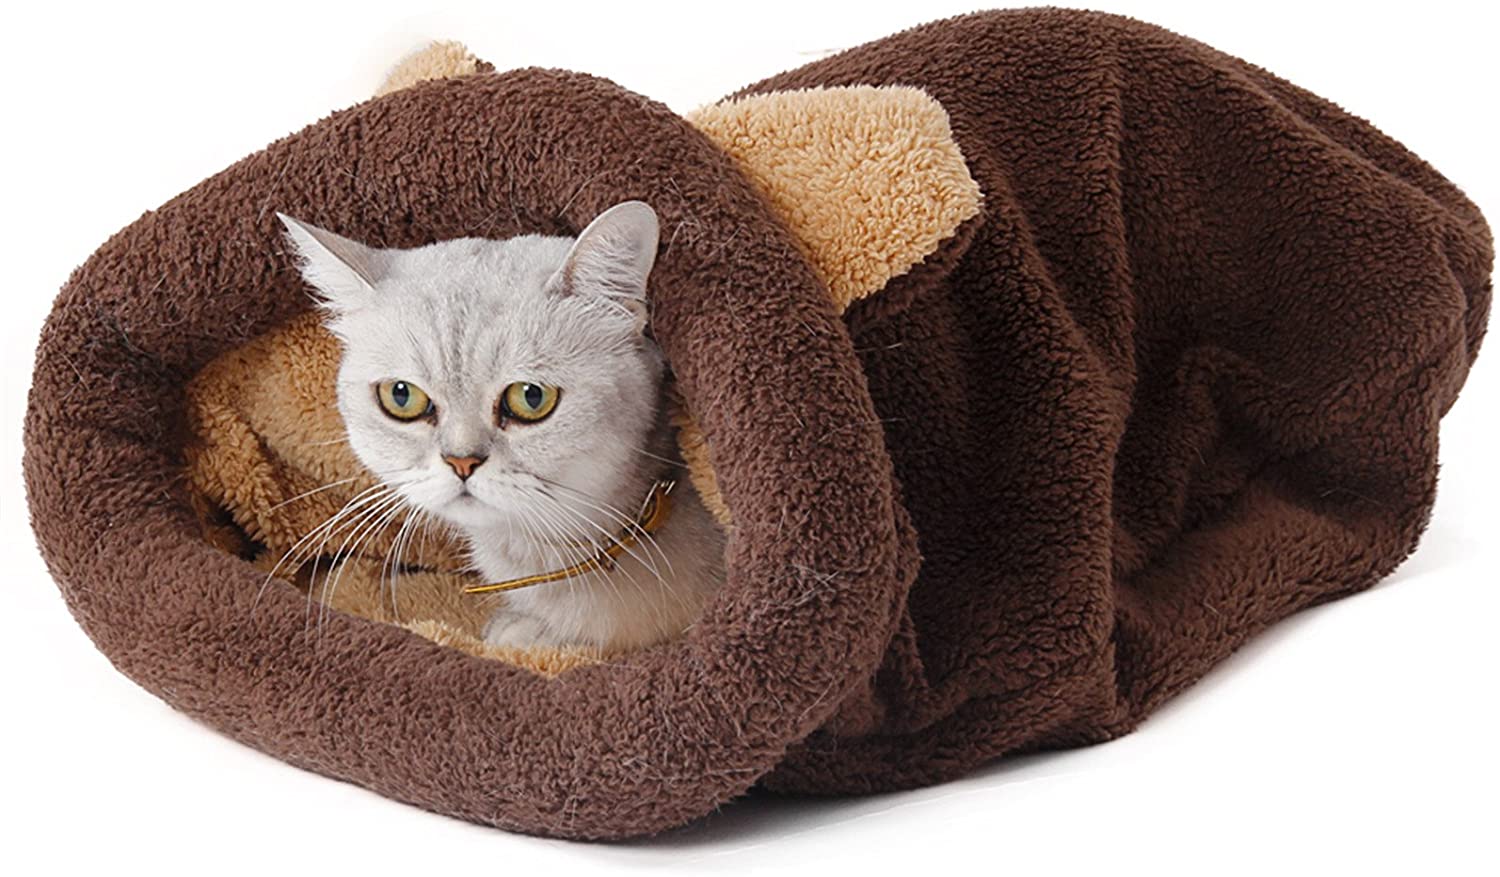  PAWZ Road Gato Bolsa de Dormir Lana Suave Lavable Caliente Camas para Gatos Saco Snuggle Manta Estera para Gatito Perrito Marrón 